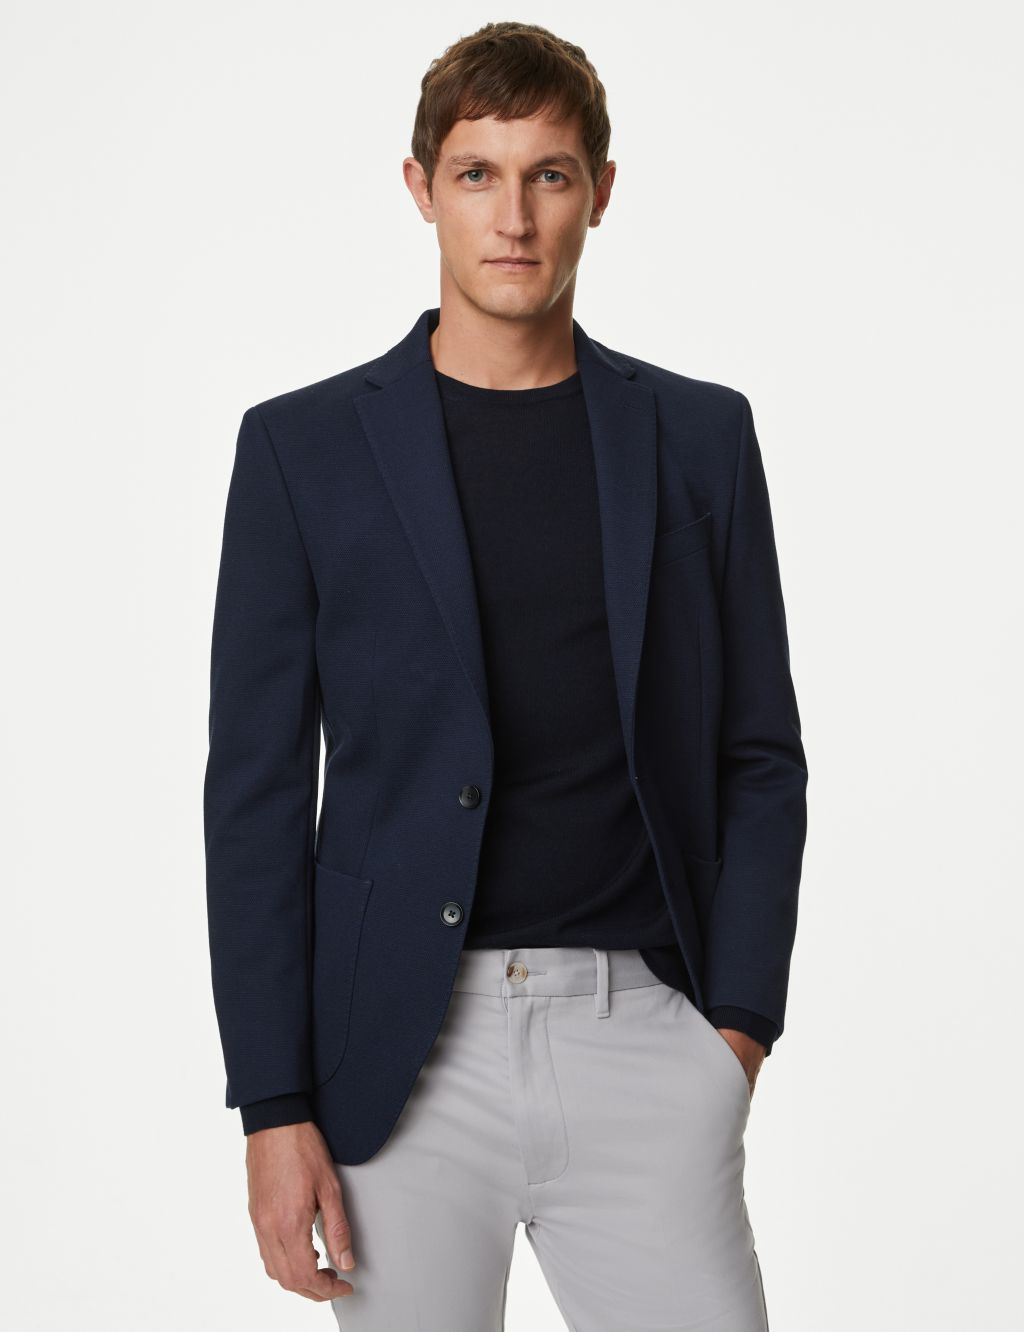 Navy Blue Blazer Matching Shirt and Pant